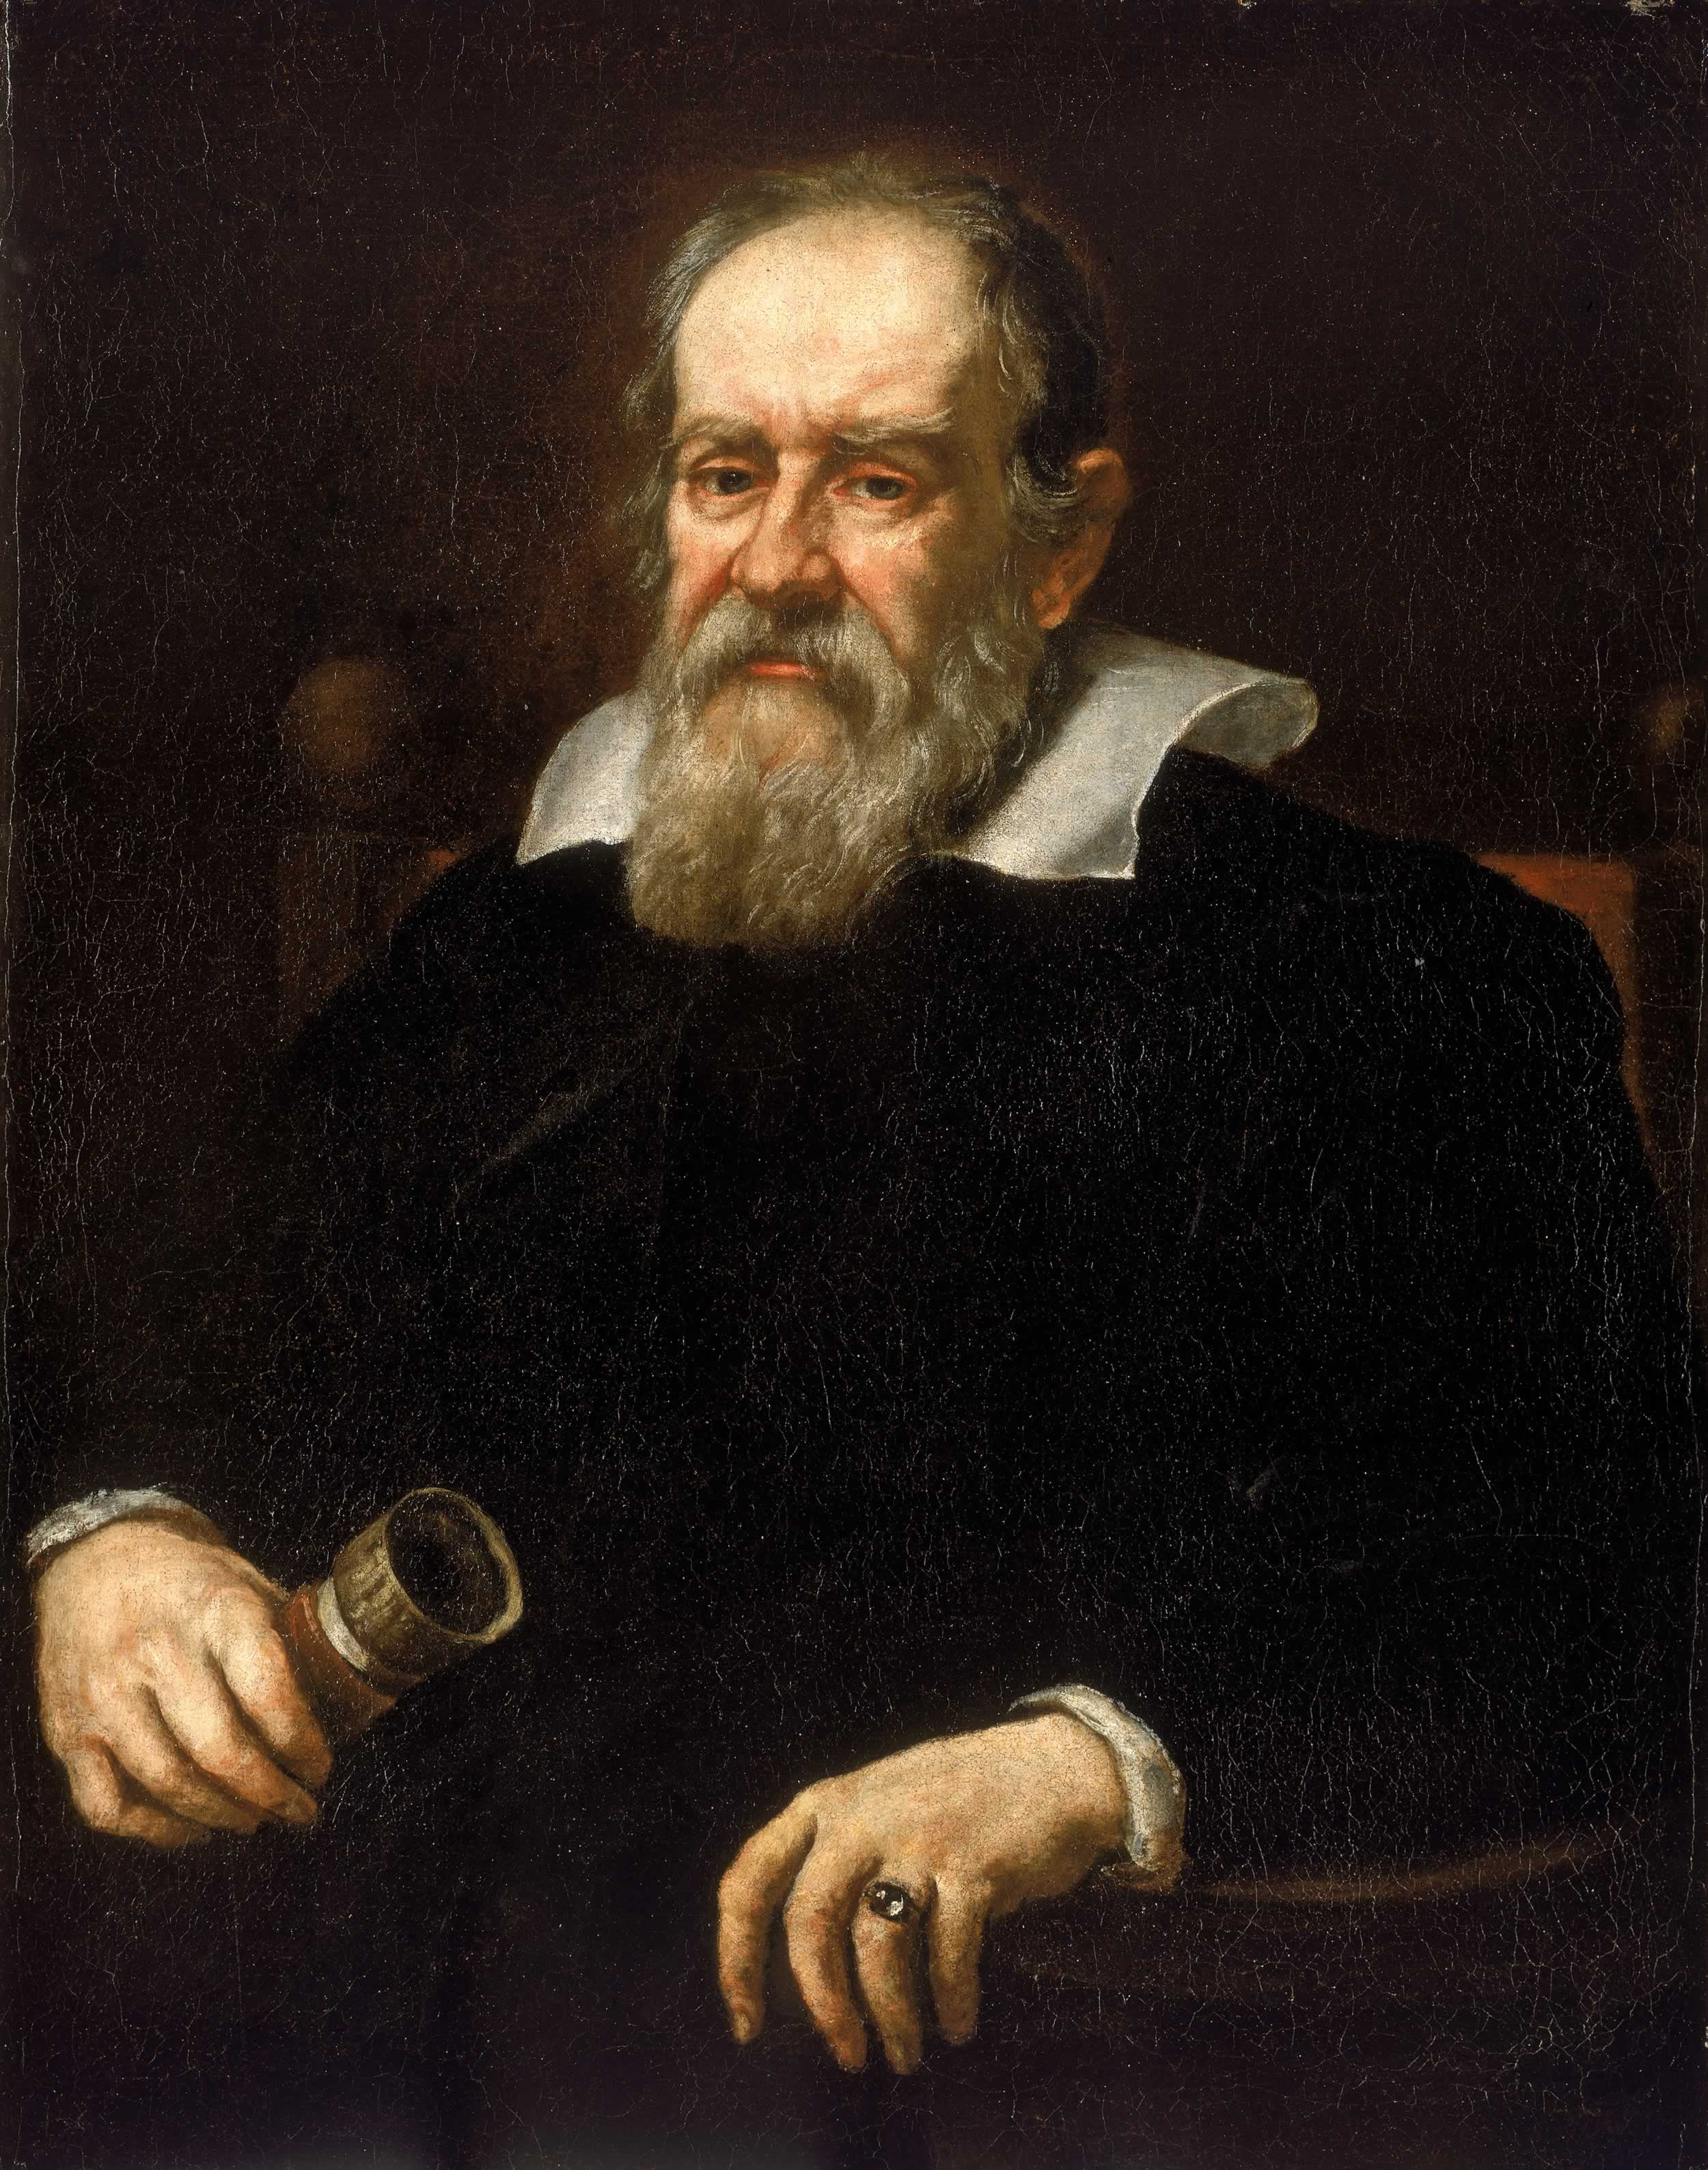 Galileo Galilei - 15 February 1564 - 8 January 1642